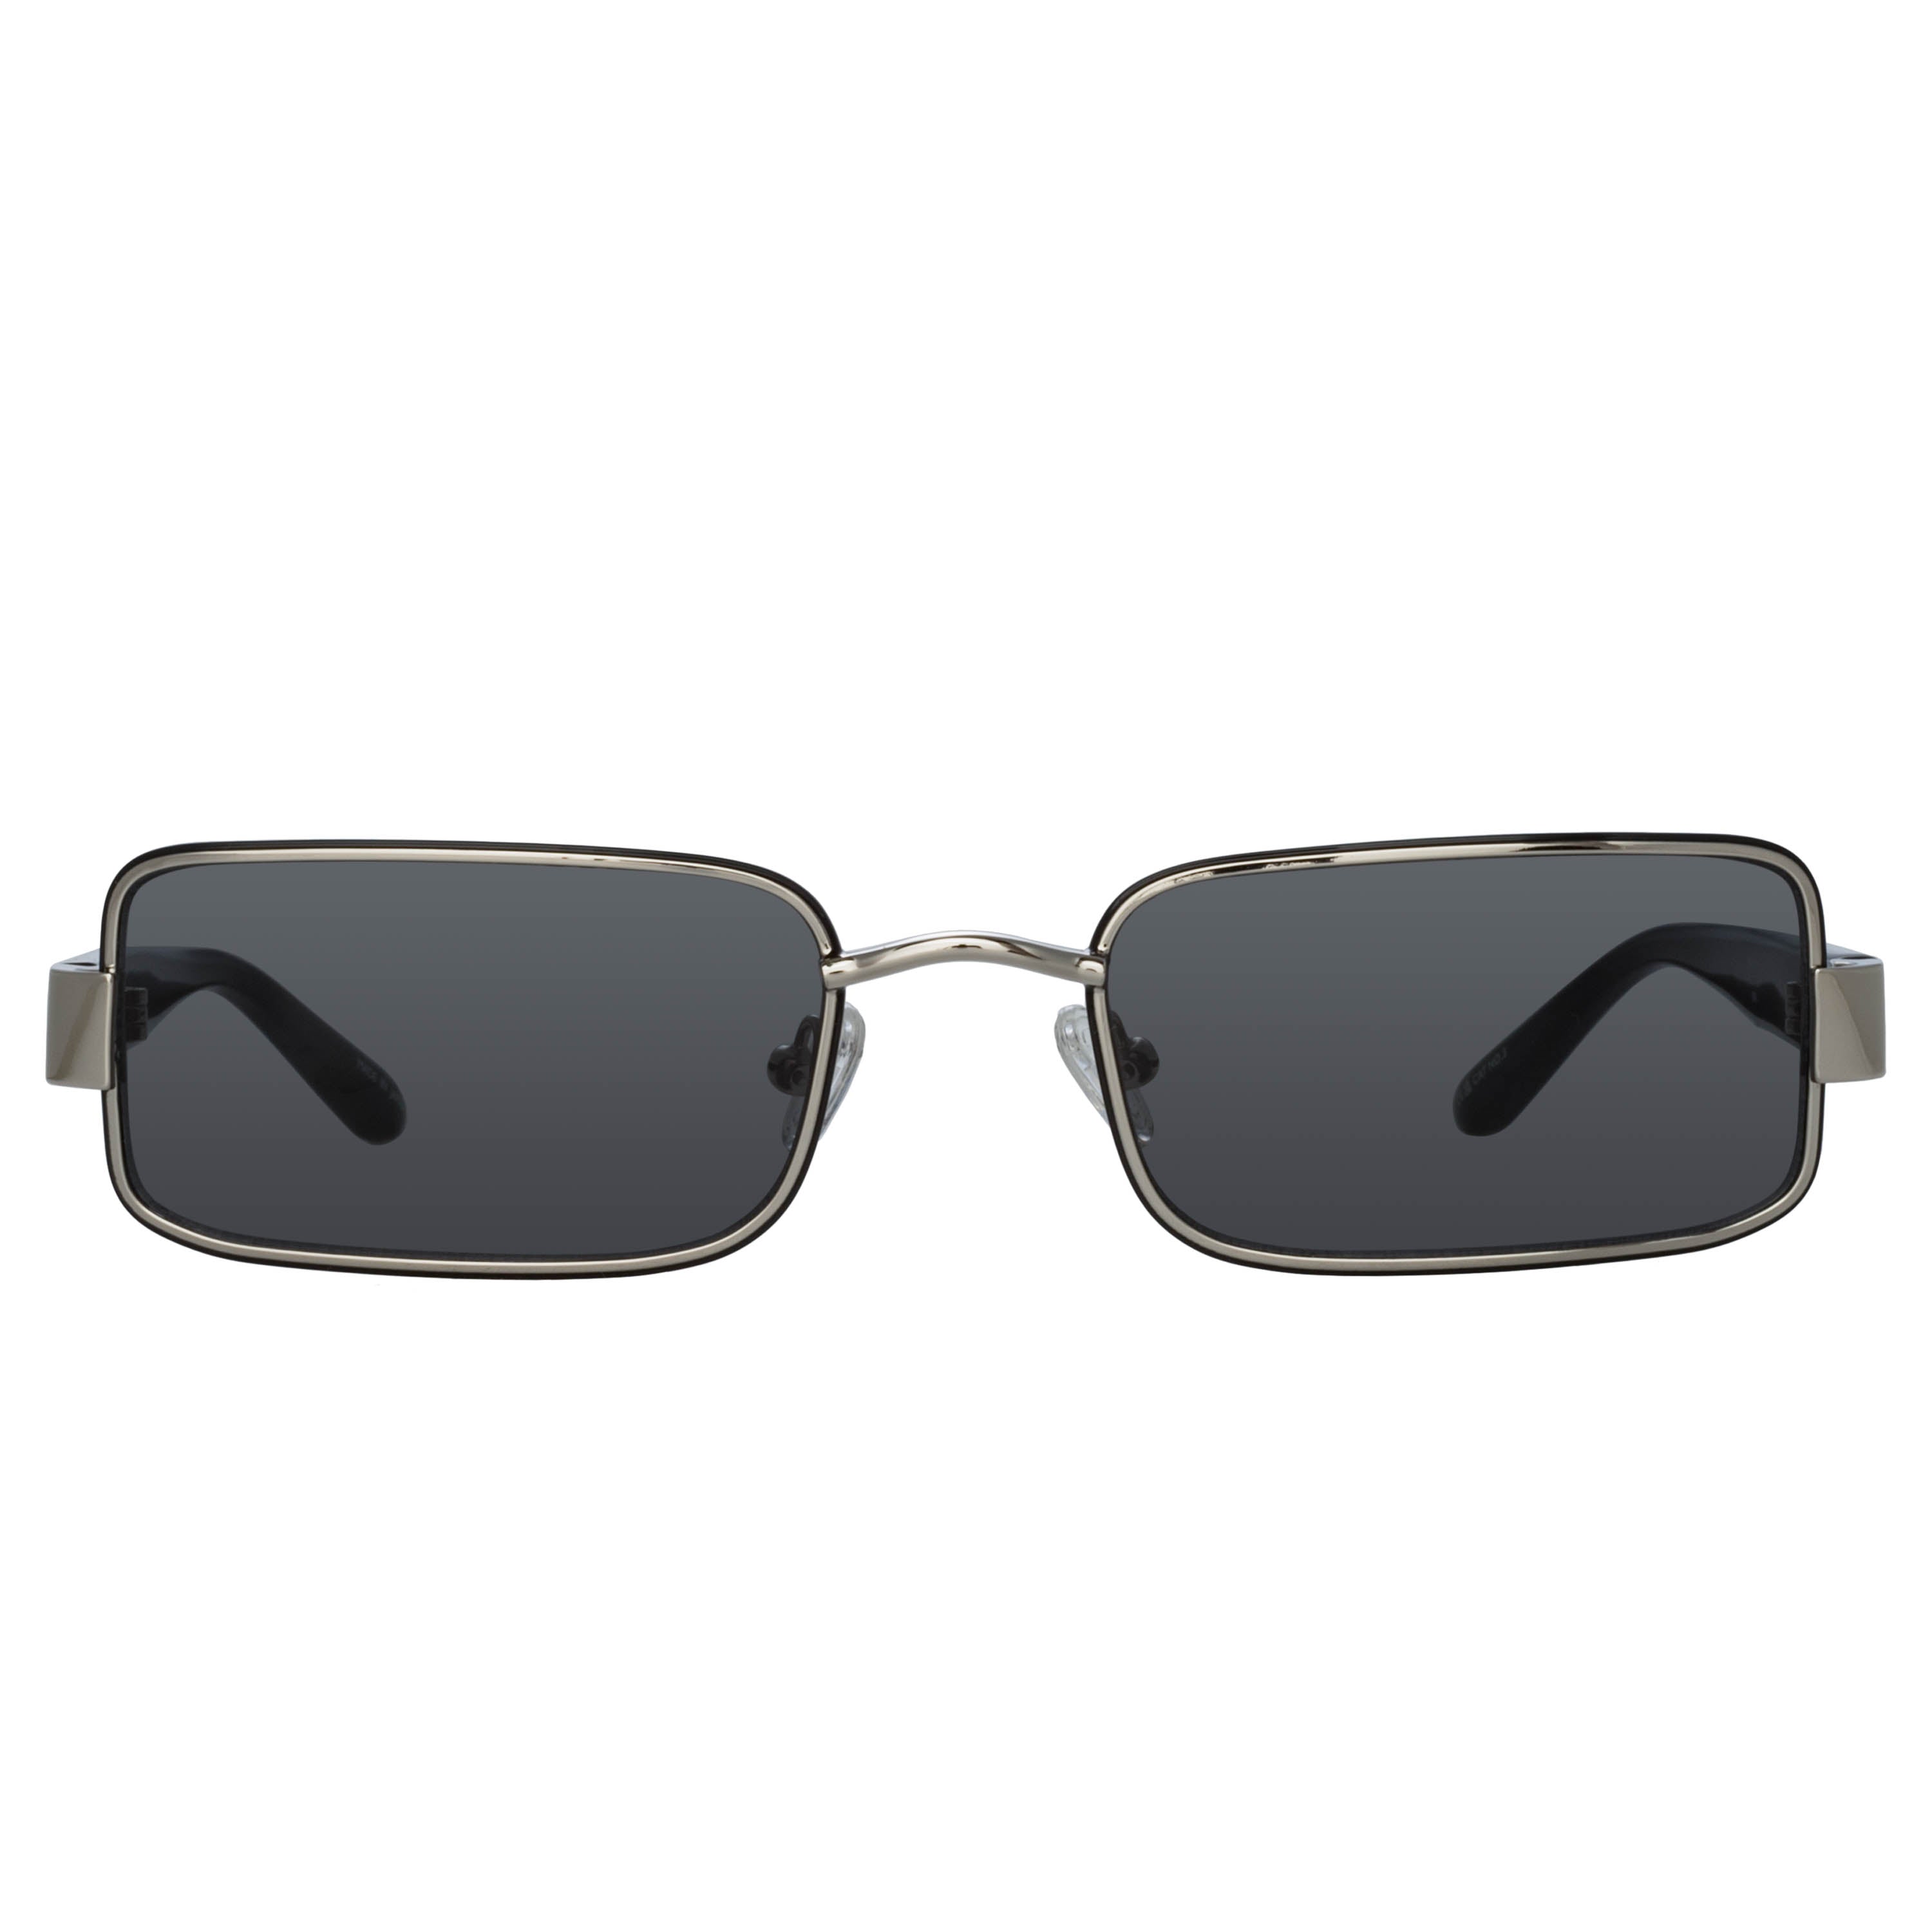 Magda Butrym Cat Eye Sunglasses in Black by LINDA FARROW – LINDA